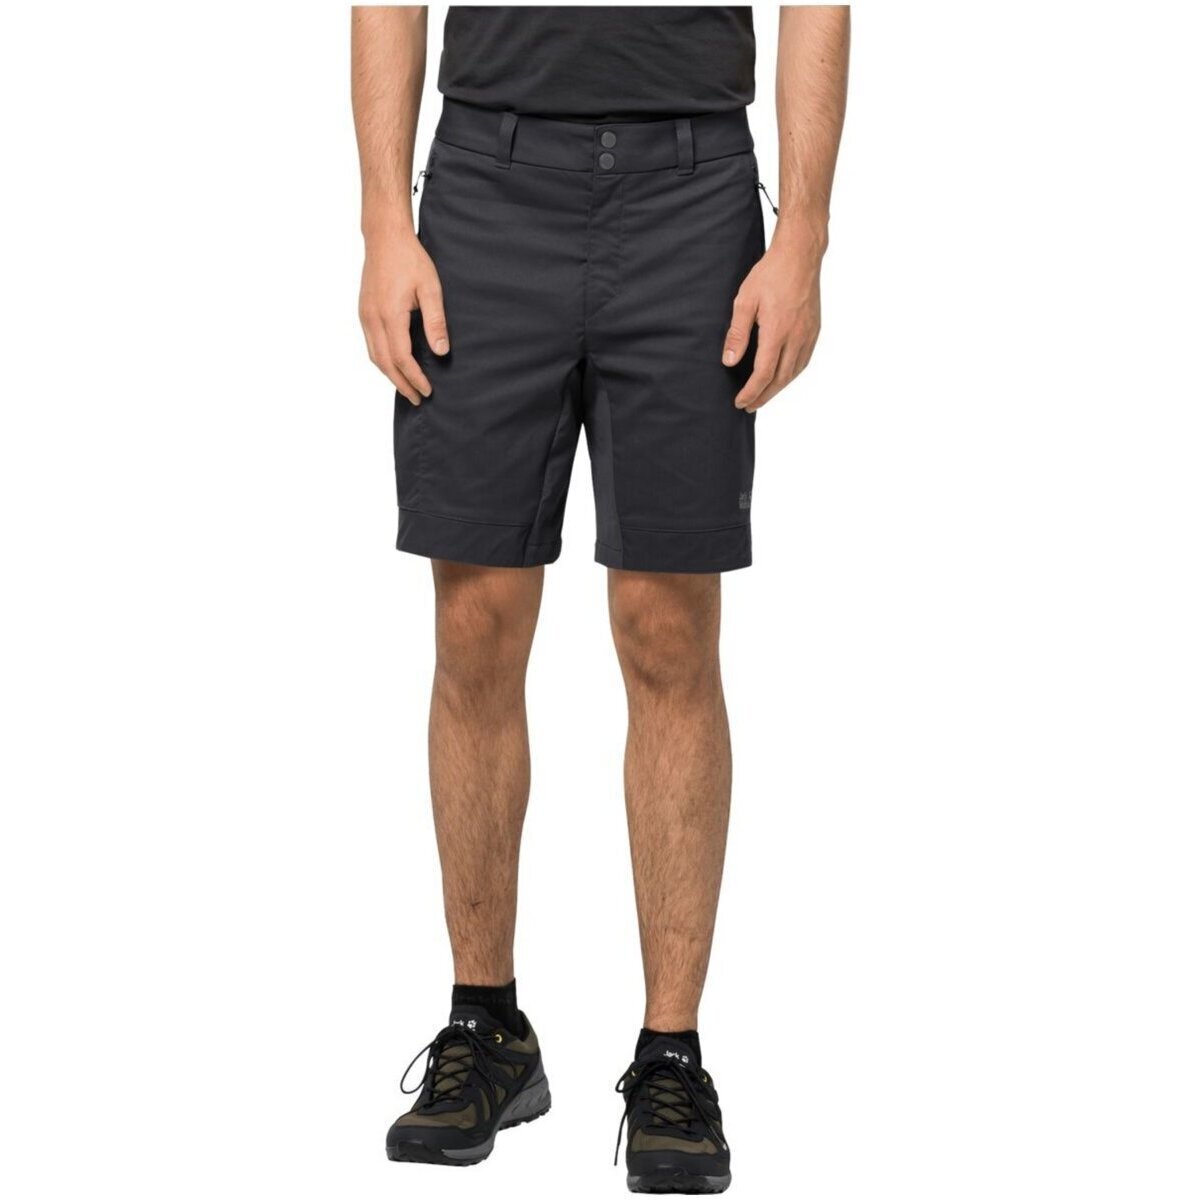 Vêtements Homme Shorts / Bermudas Jack Wolfskin  Noir